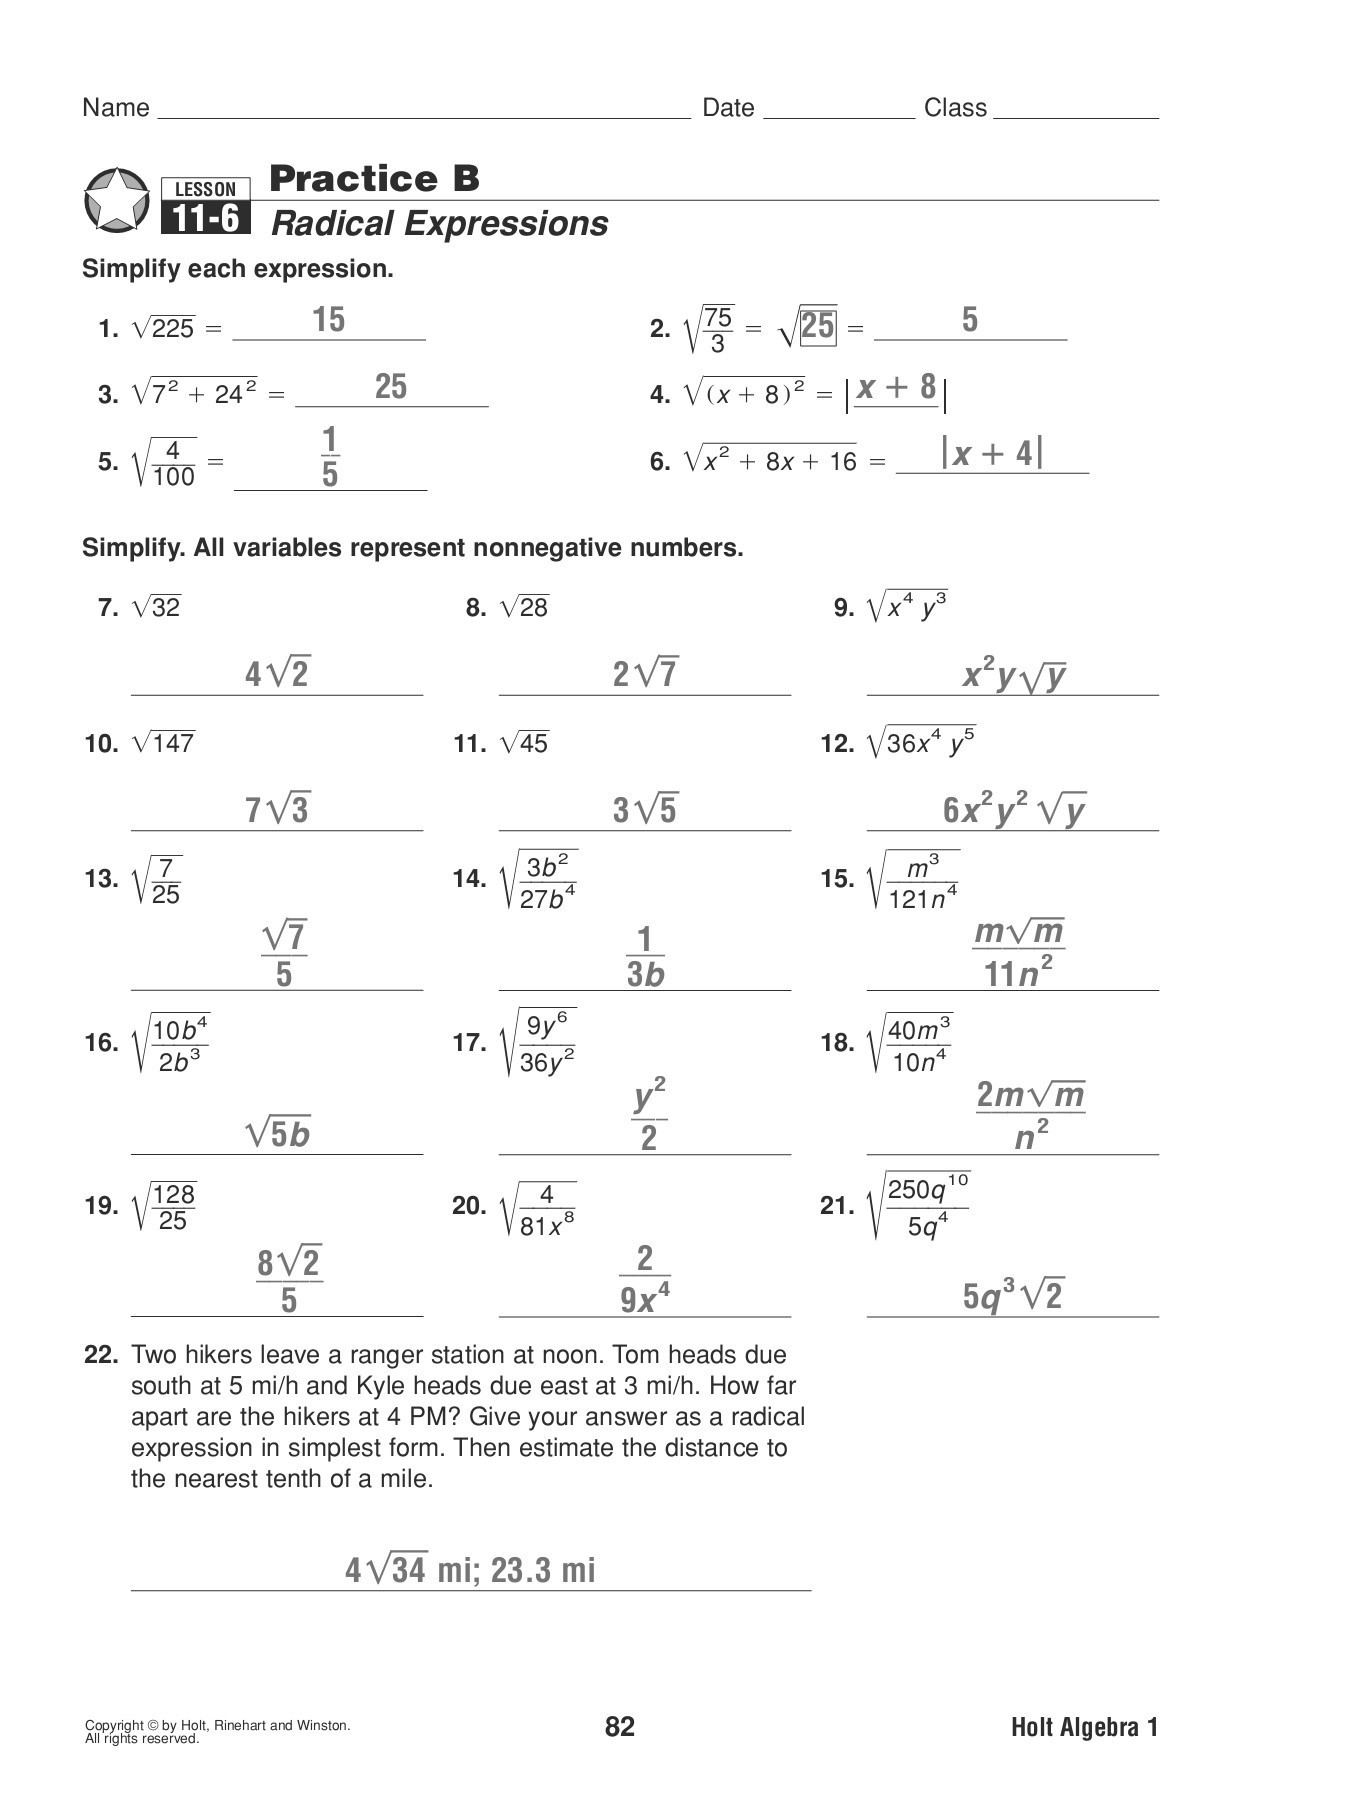 Simplifying Radicals Practice Worksheet Lesson Practice B 11 6 Radical Expressions